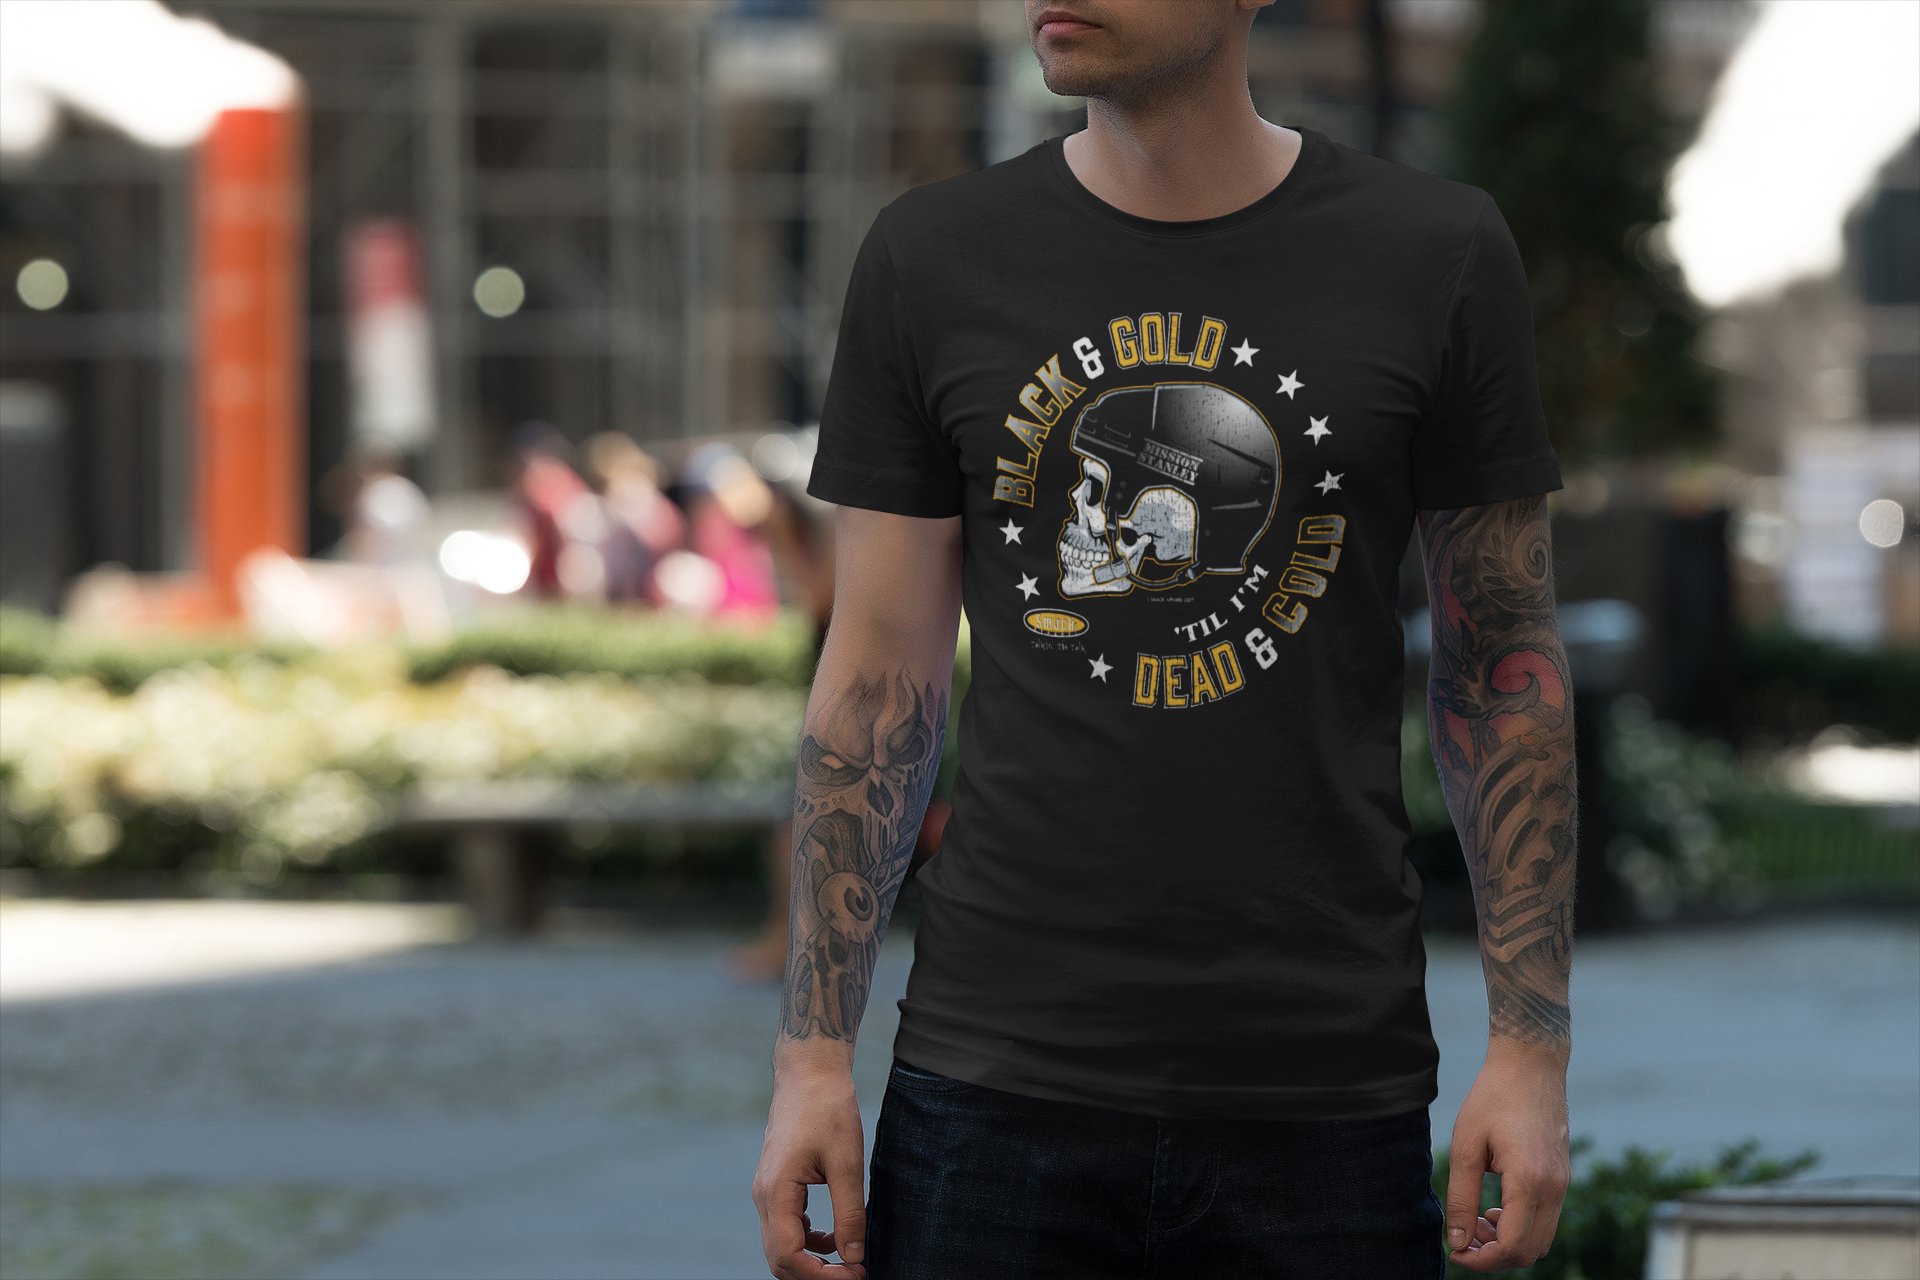 Bear Down Boston Shirt – Smack Apparel